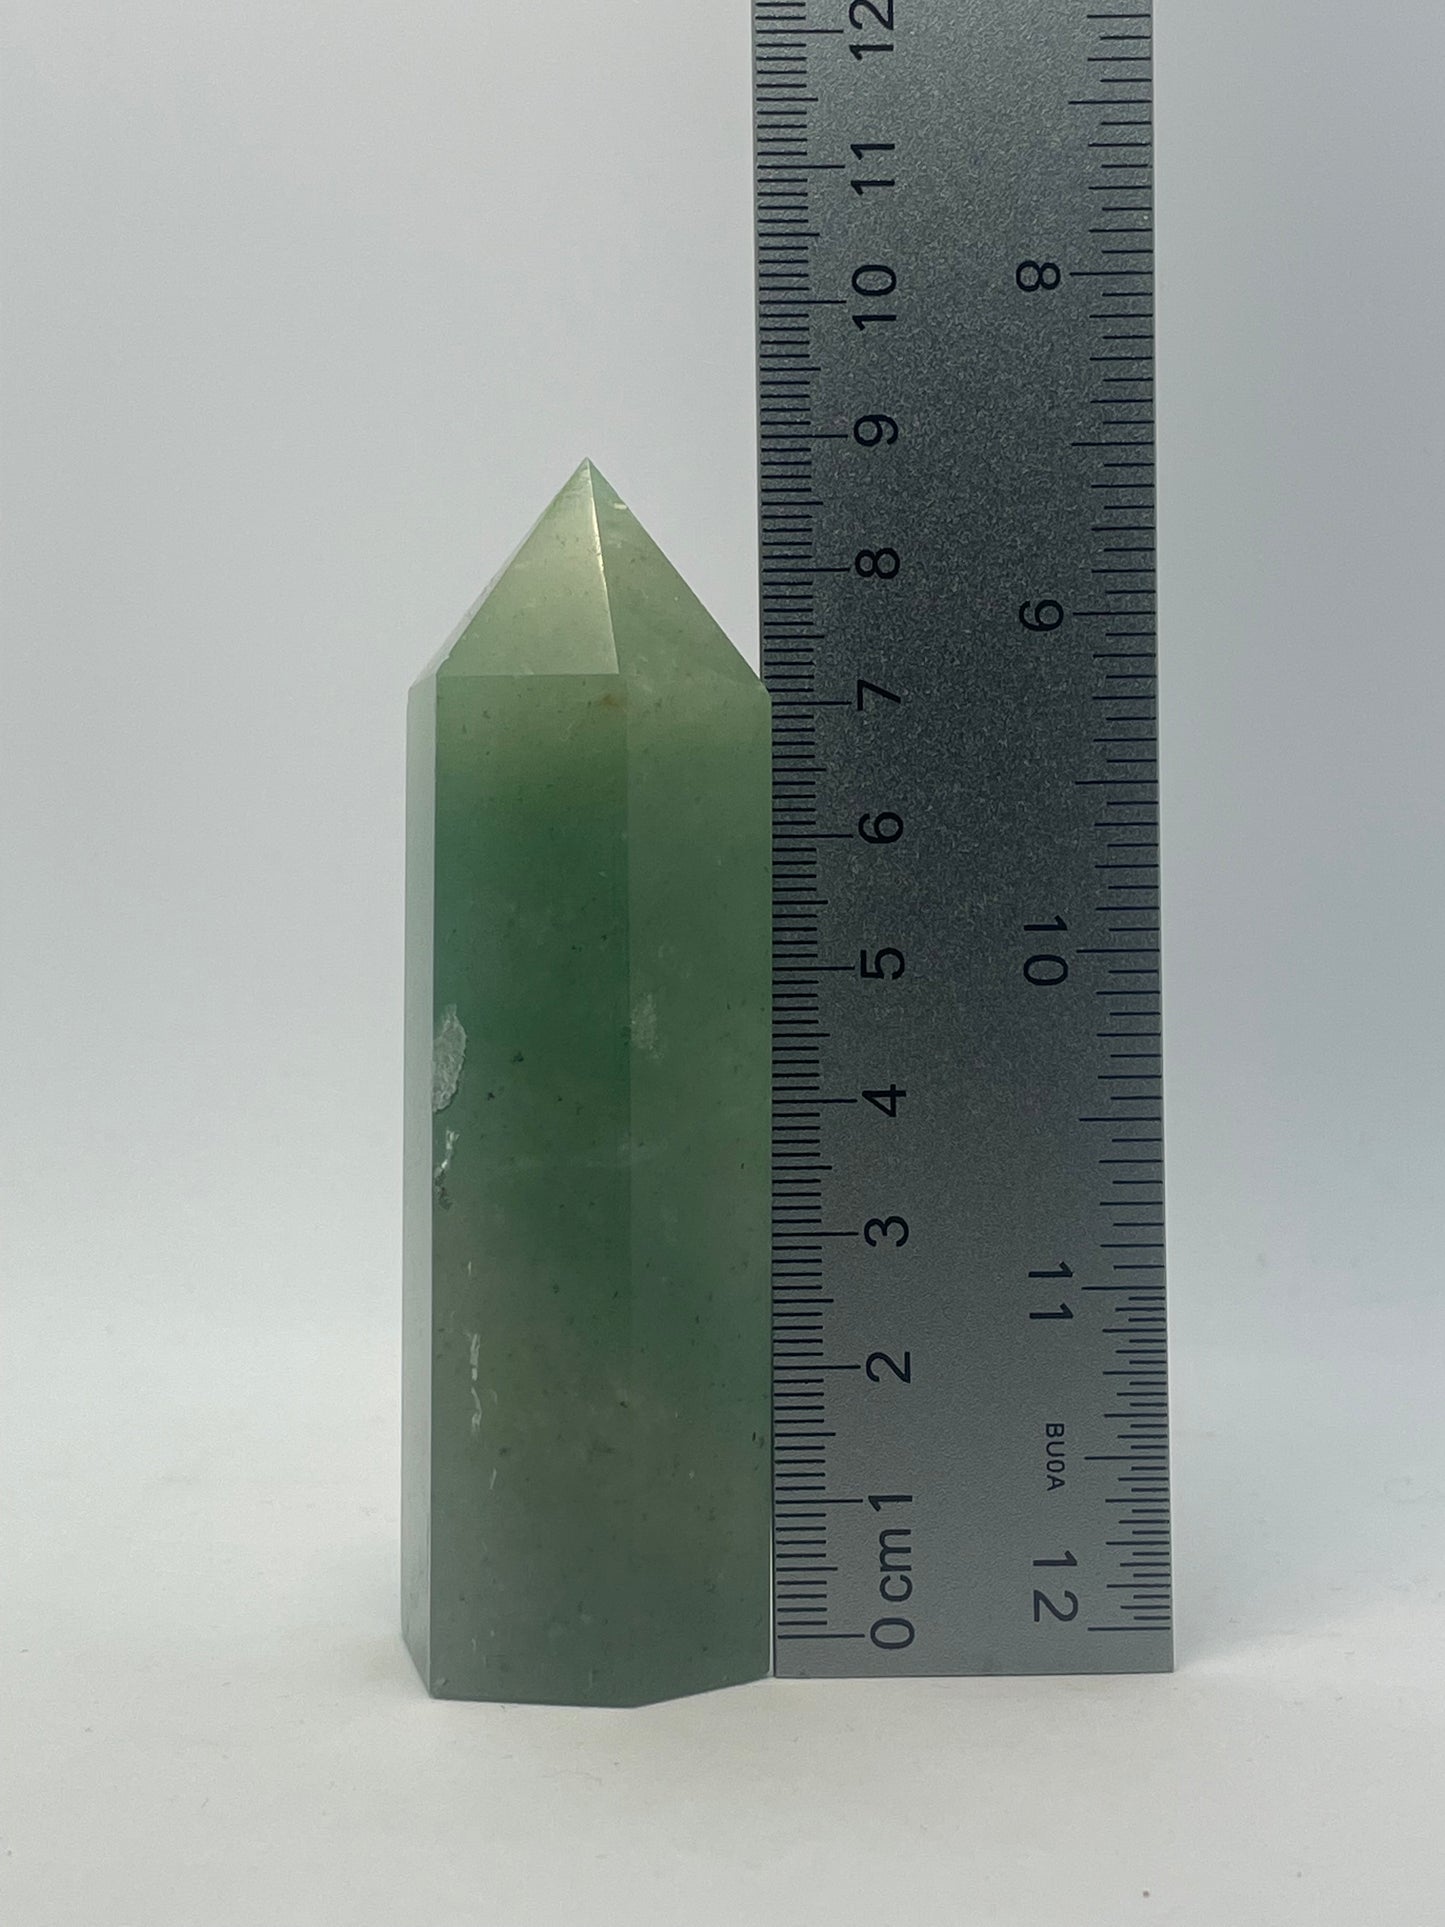 Point crystal Green Aventurine